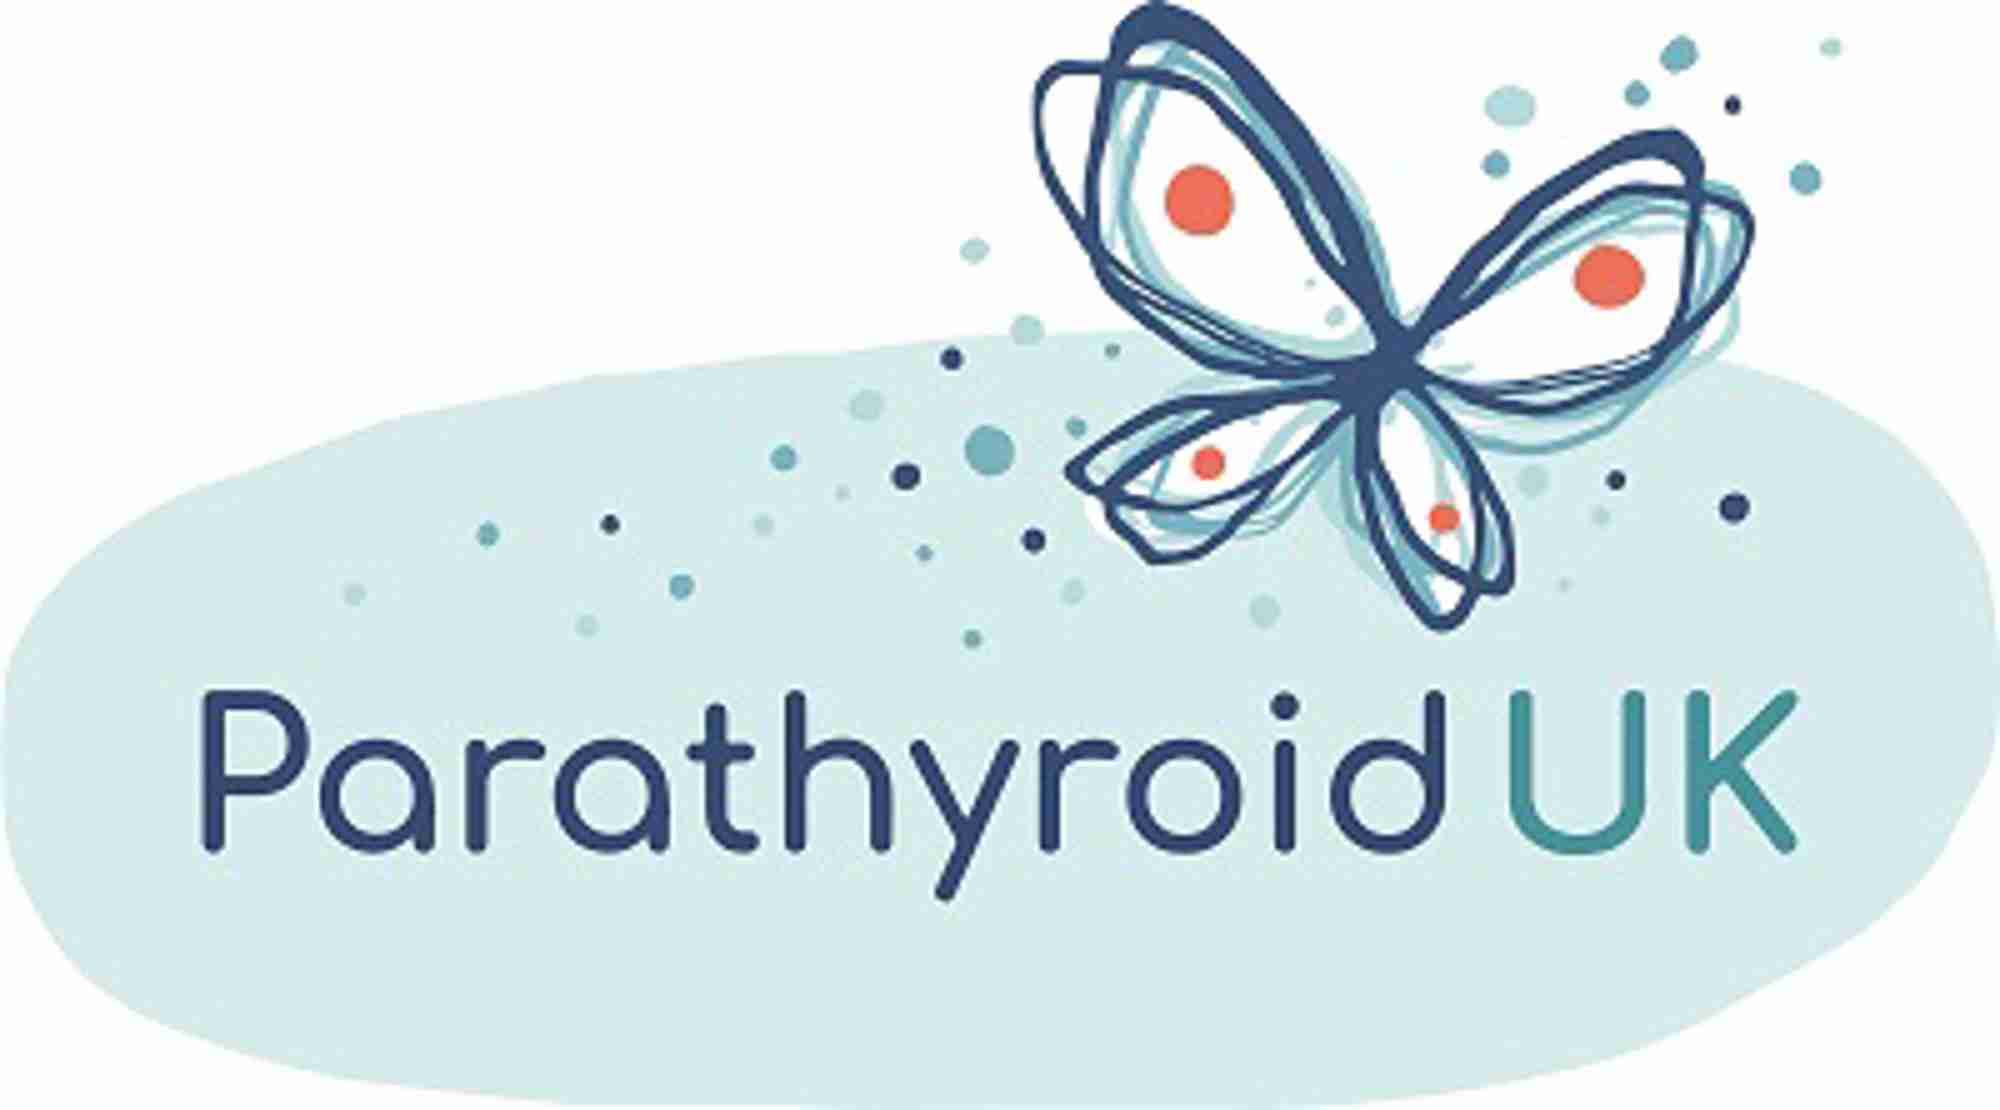 Parathyroid UK Logo_400wide.jpg